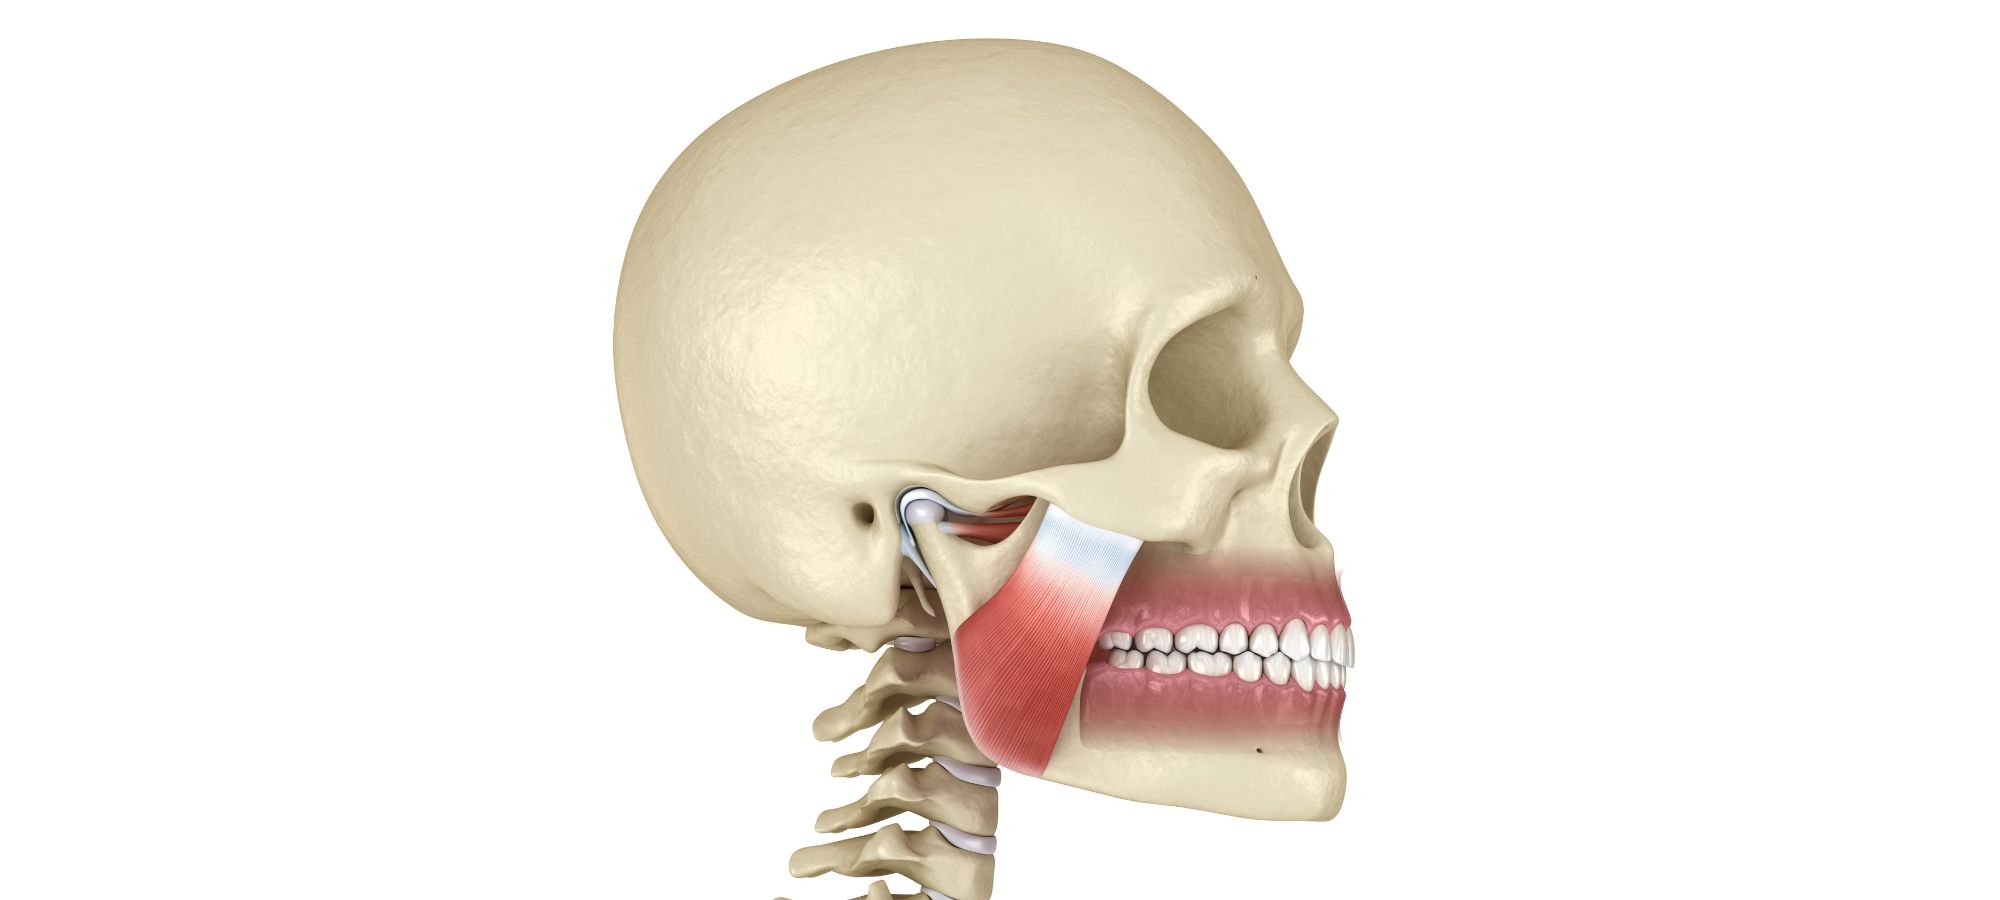 temporomandibular joint disorders